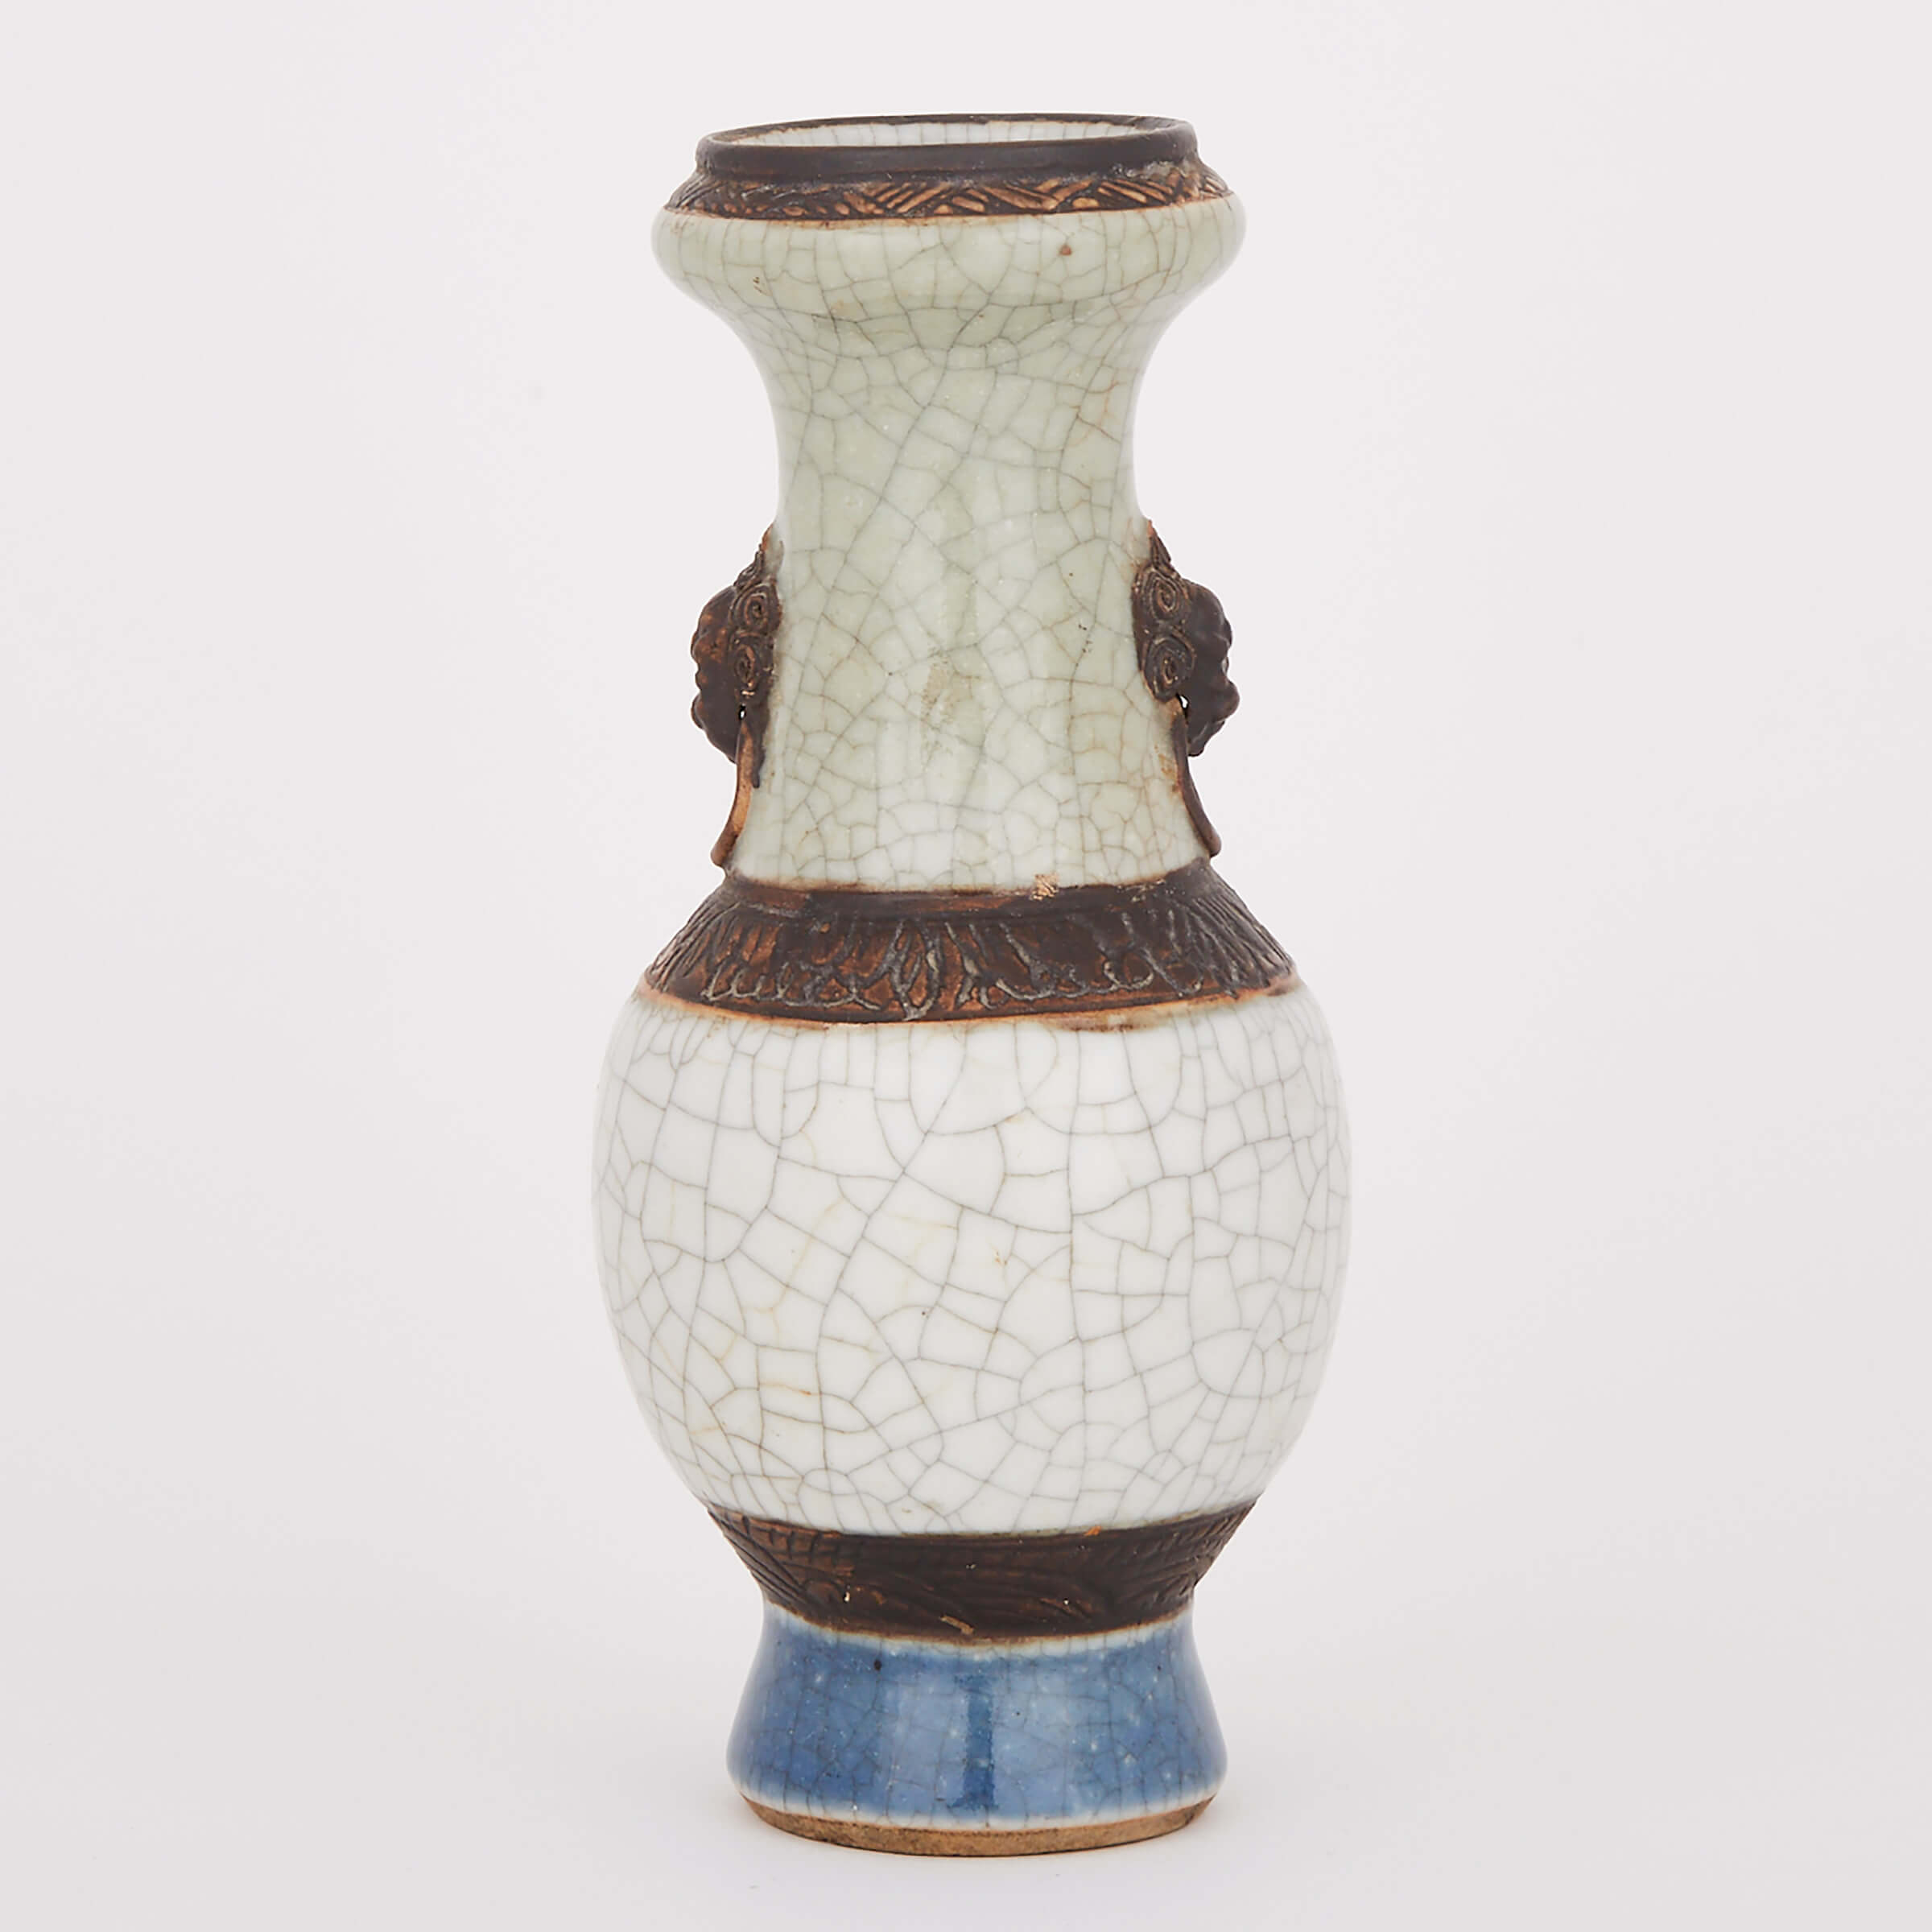 A Crackled Glaze Vase, 19th Century